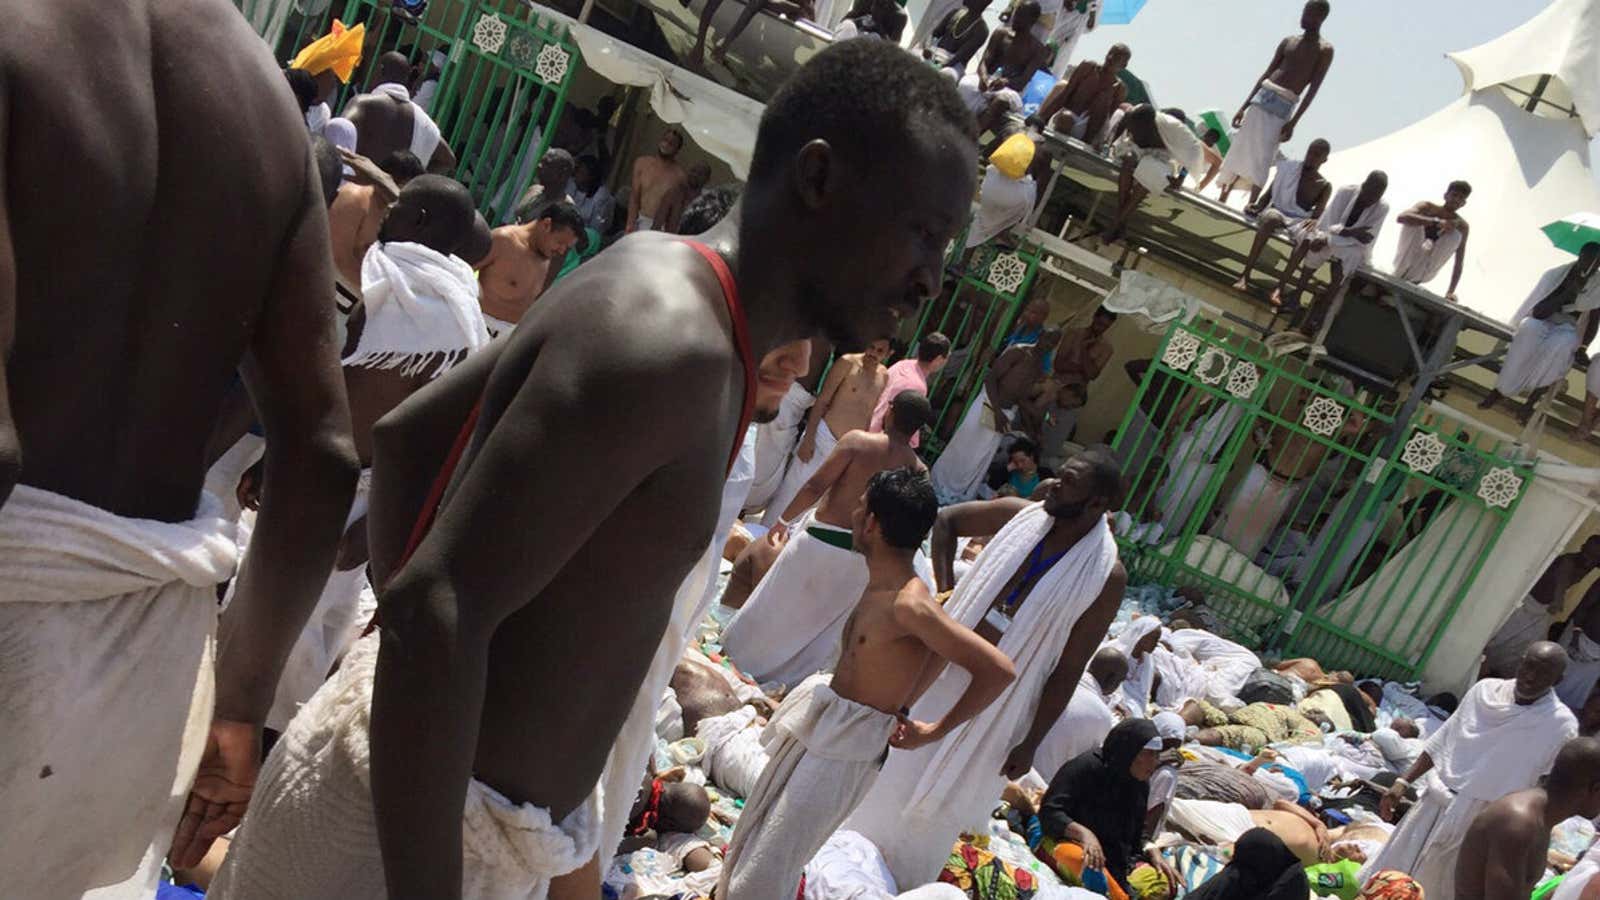 Pilgrims gather around the victims of a stampede in Mina, Saudi Arabia